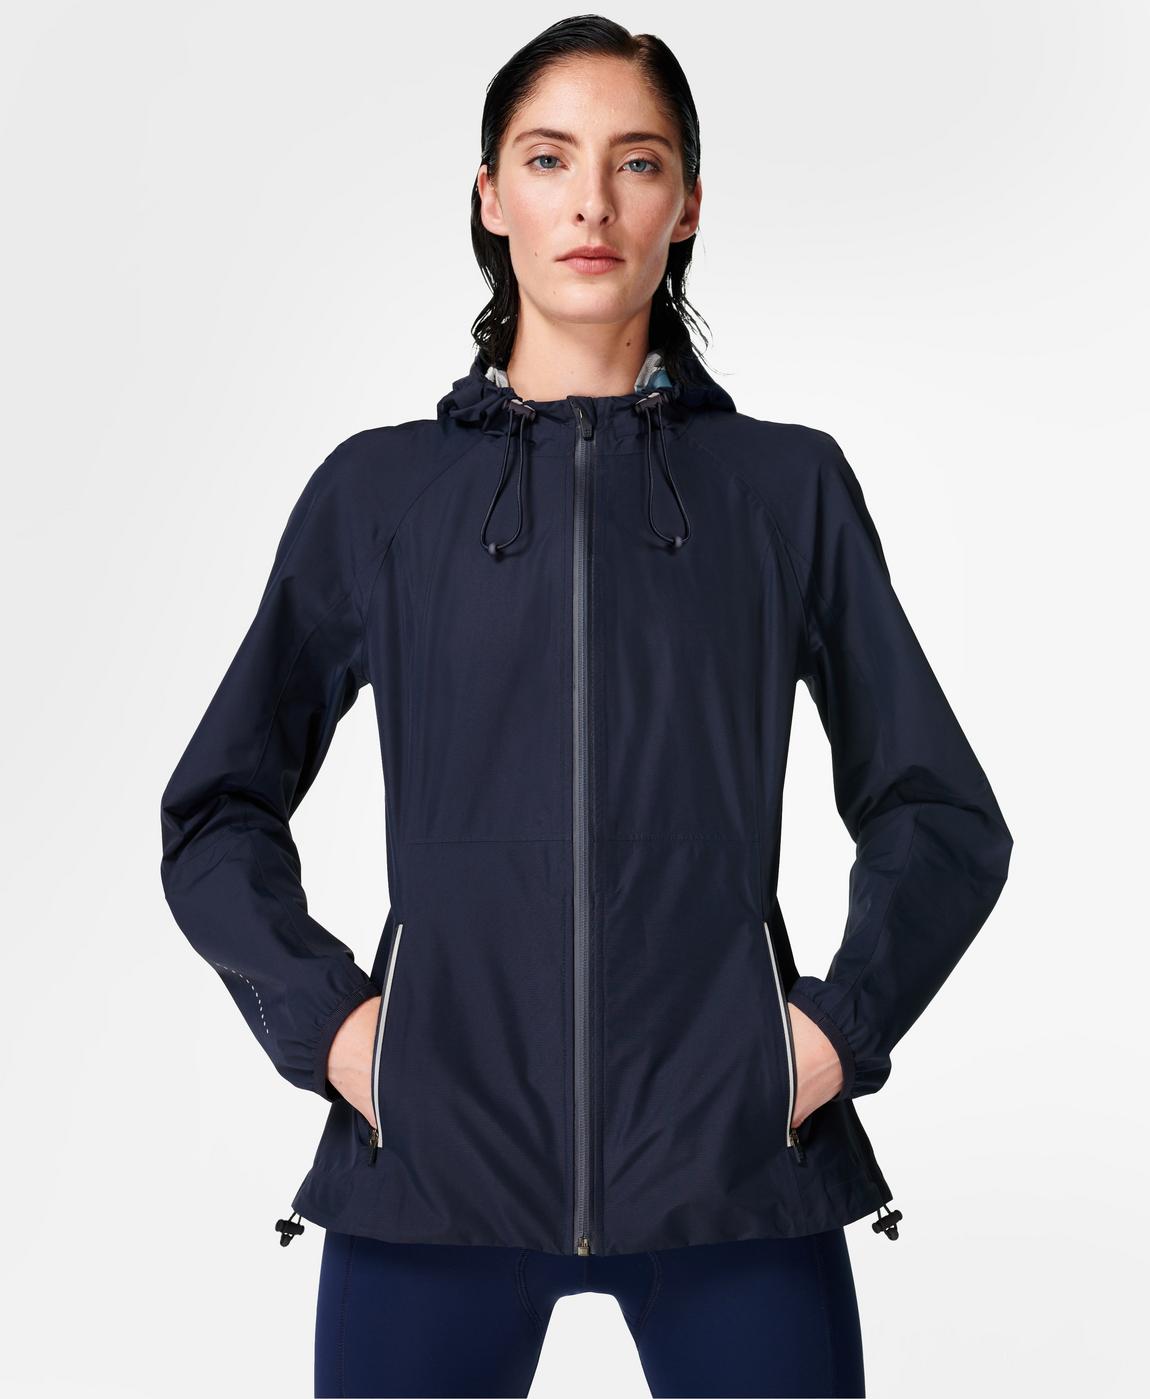 Commuter Waterproof Cycling Jacket- navyblue | Women's Jackets & Coats ...